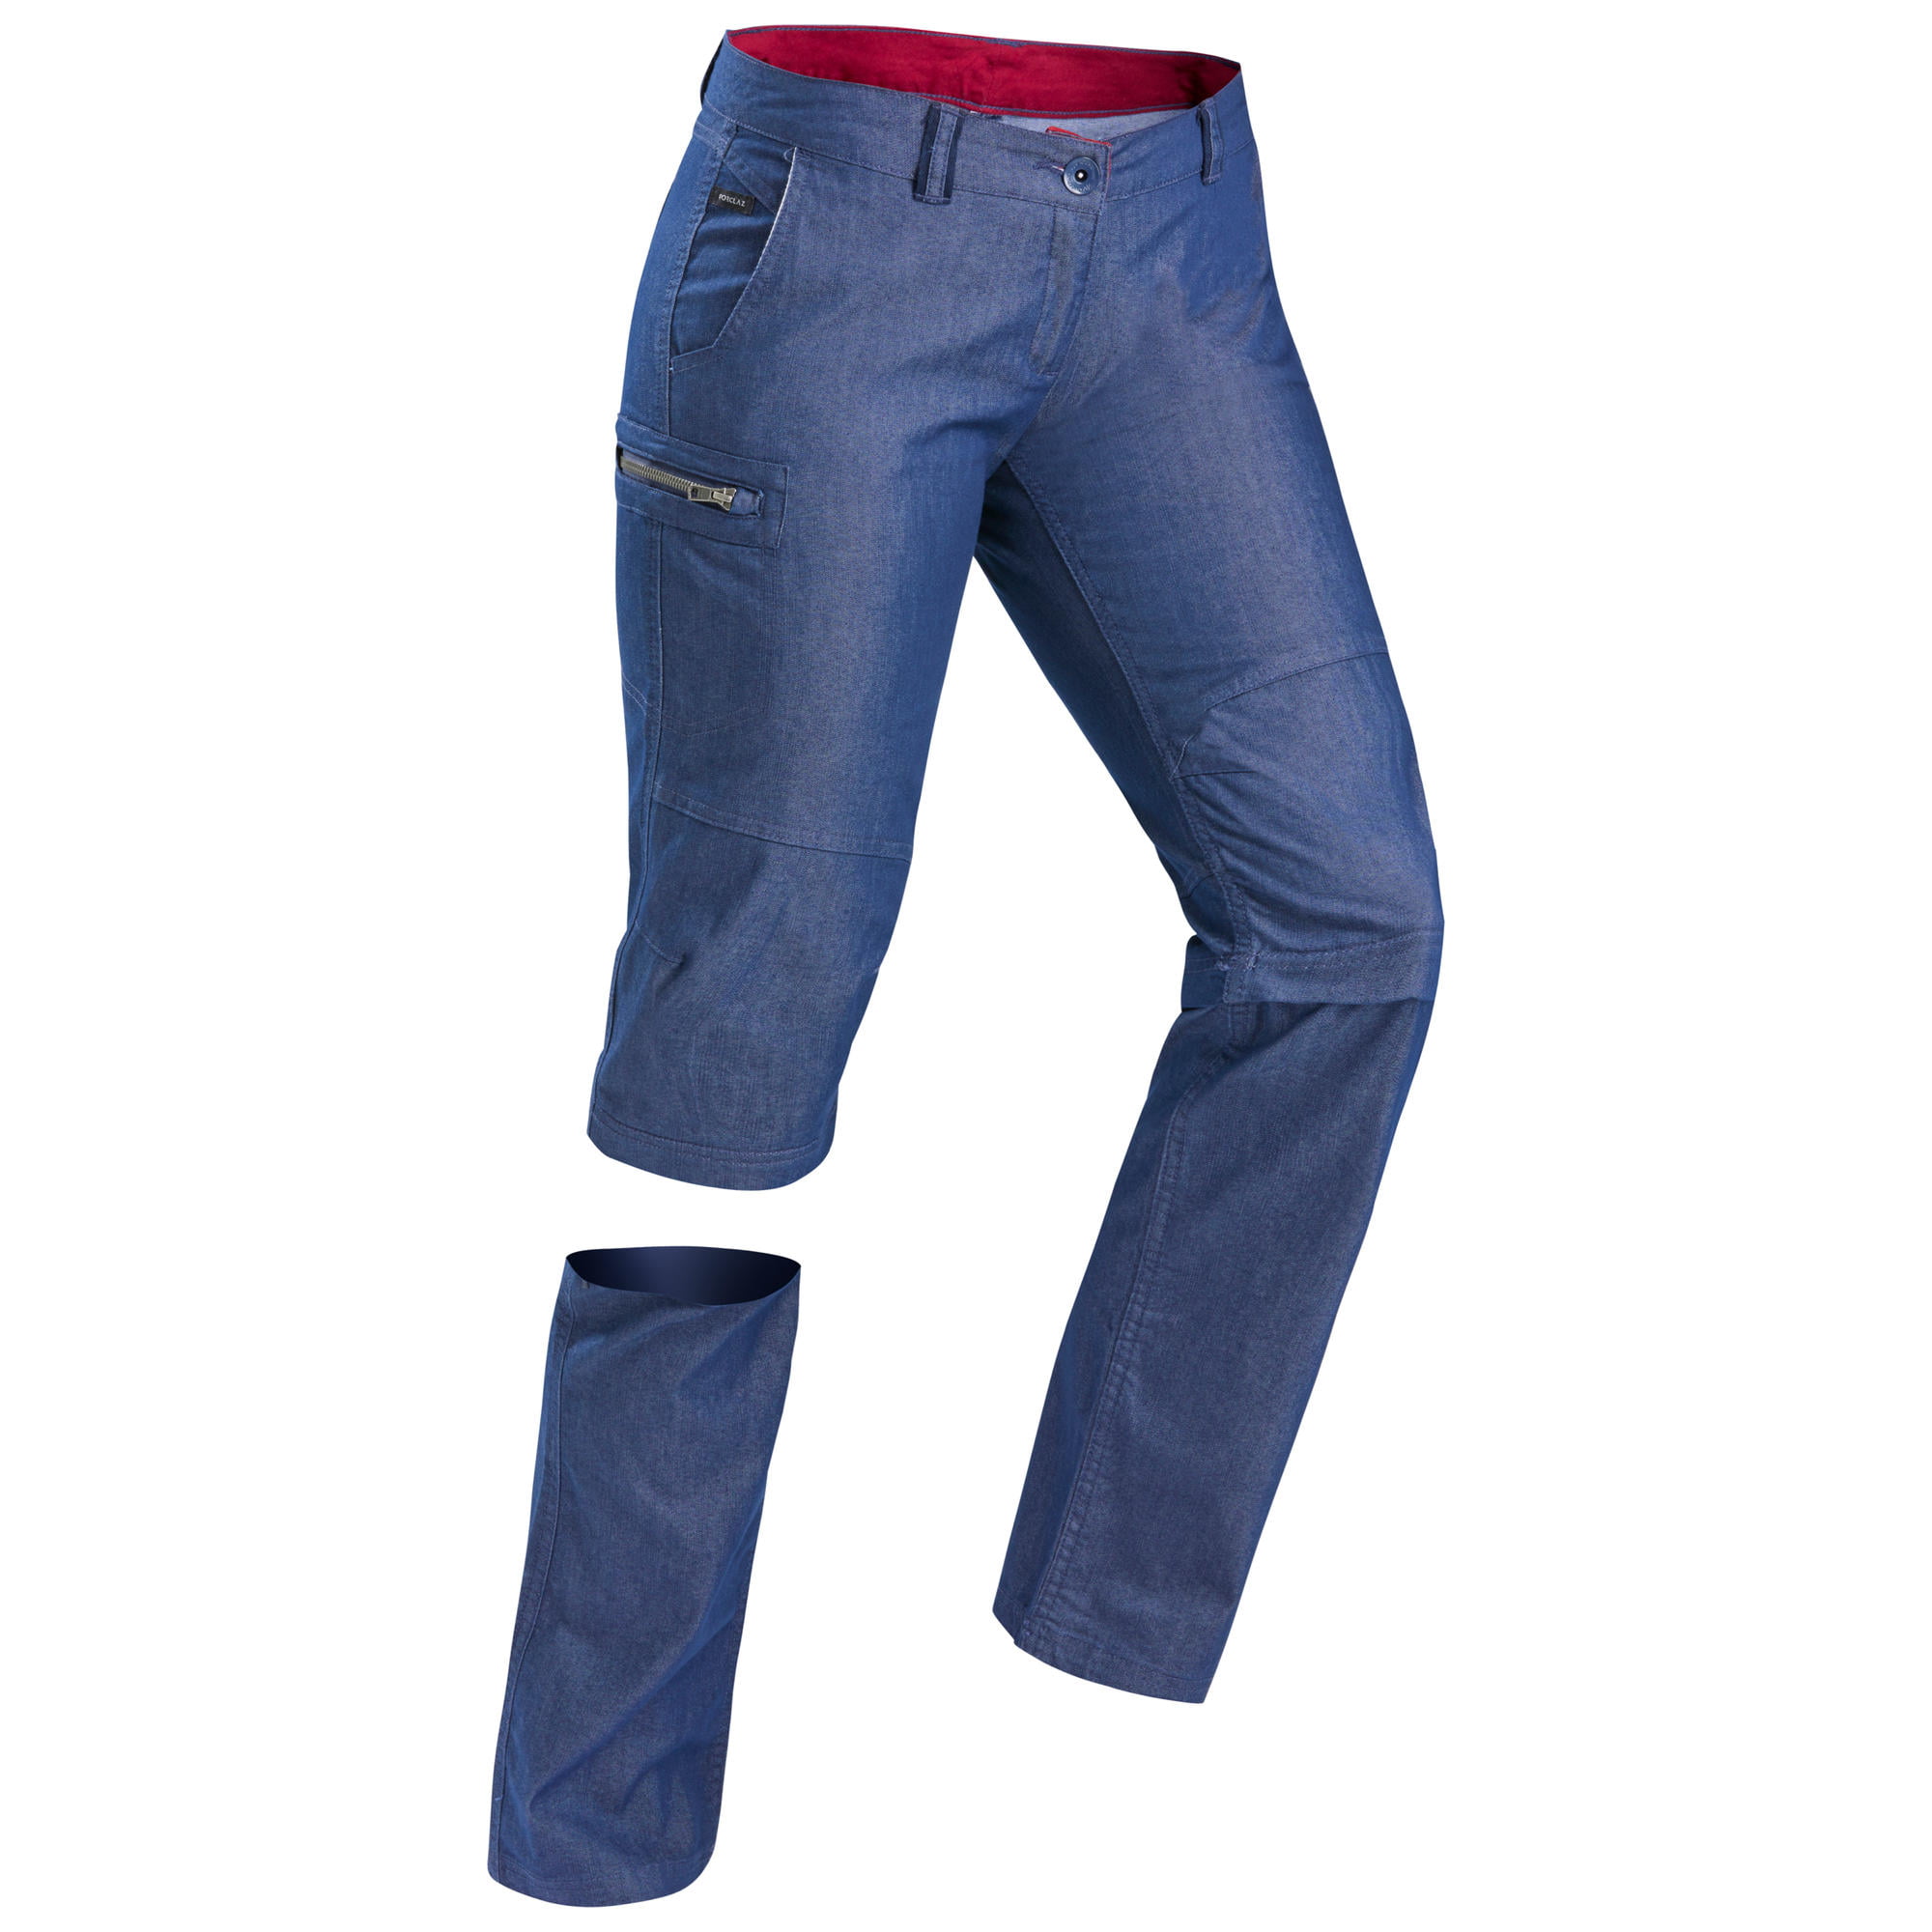 decathlon jeans